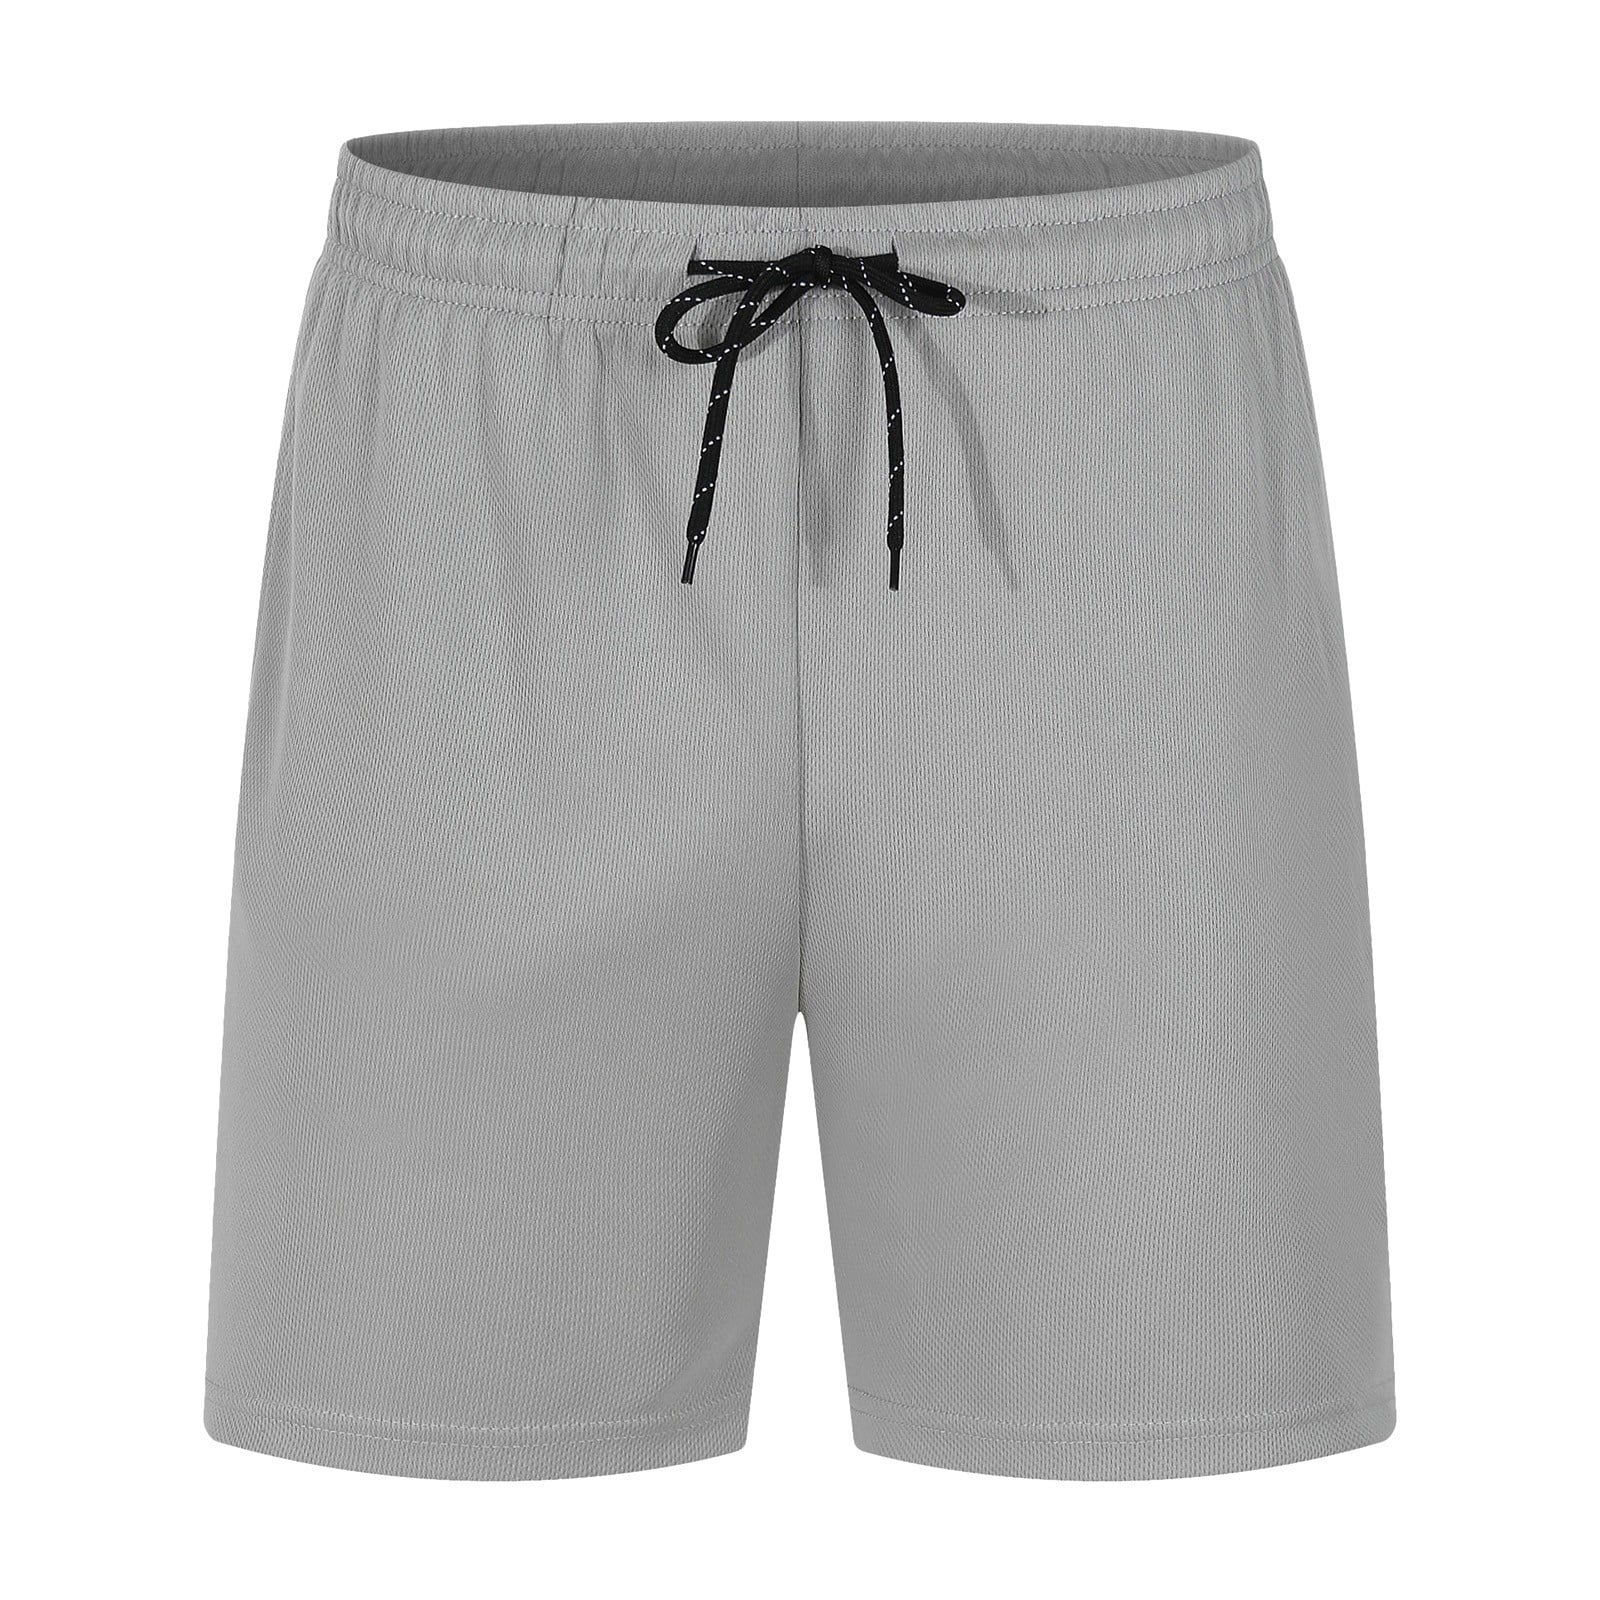 Mens Shorts Casual Stylish Flex Regular Fit Workout Shorts Lightweight  Outdoor Hiking Fishing Travel Long Shorts White Shorts Men(Black,Small)  A3934